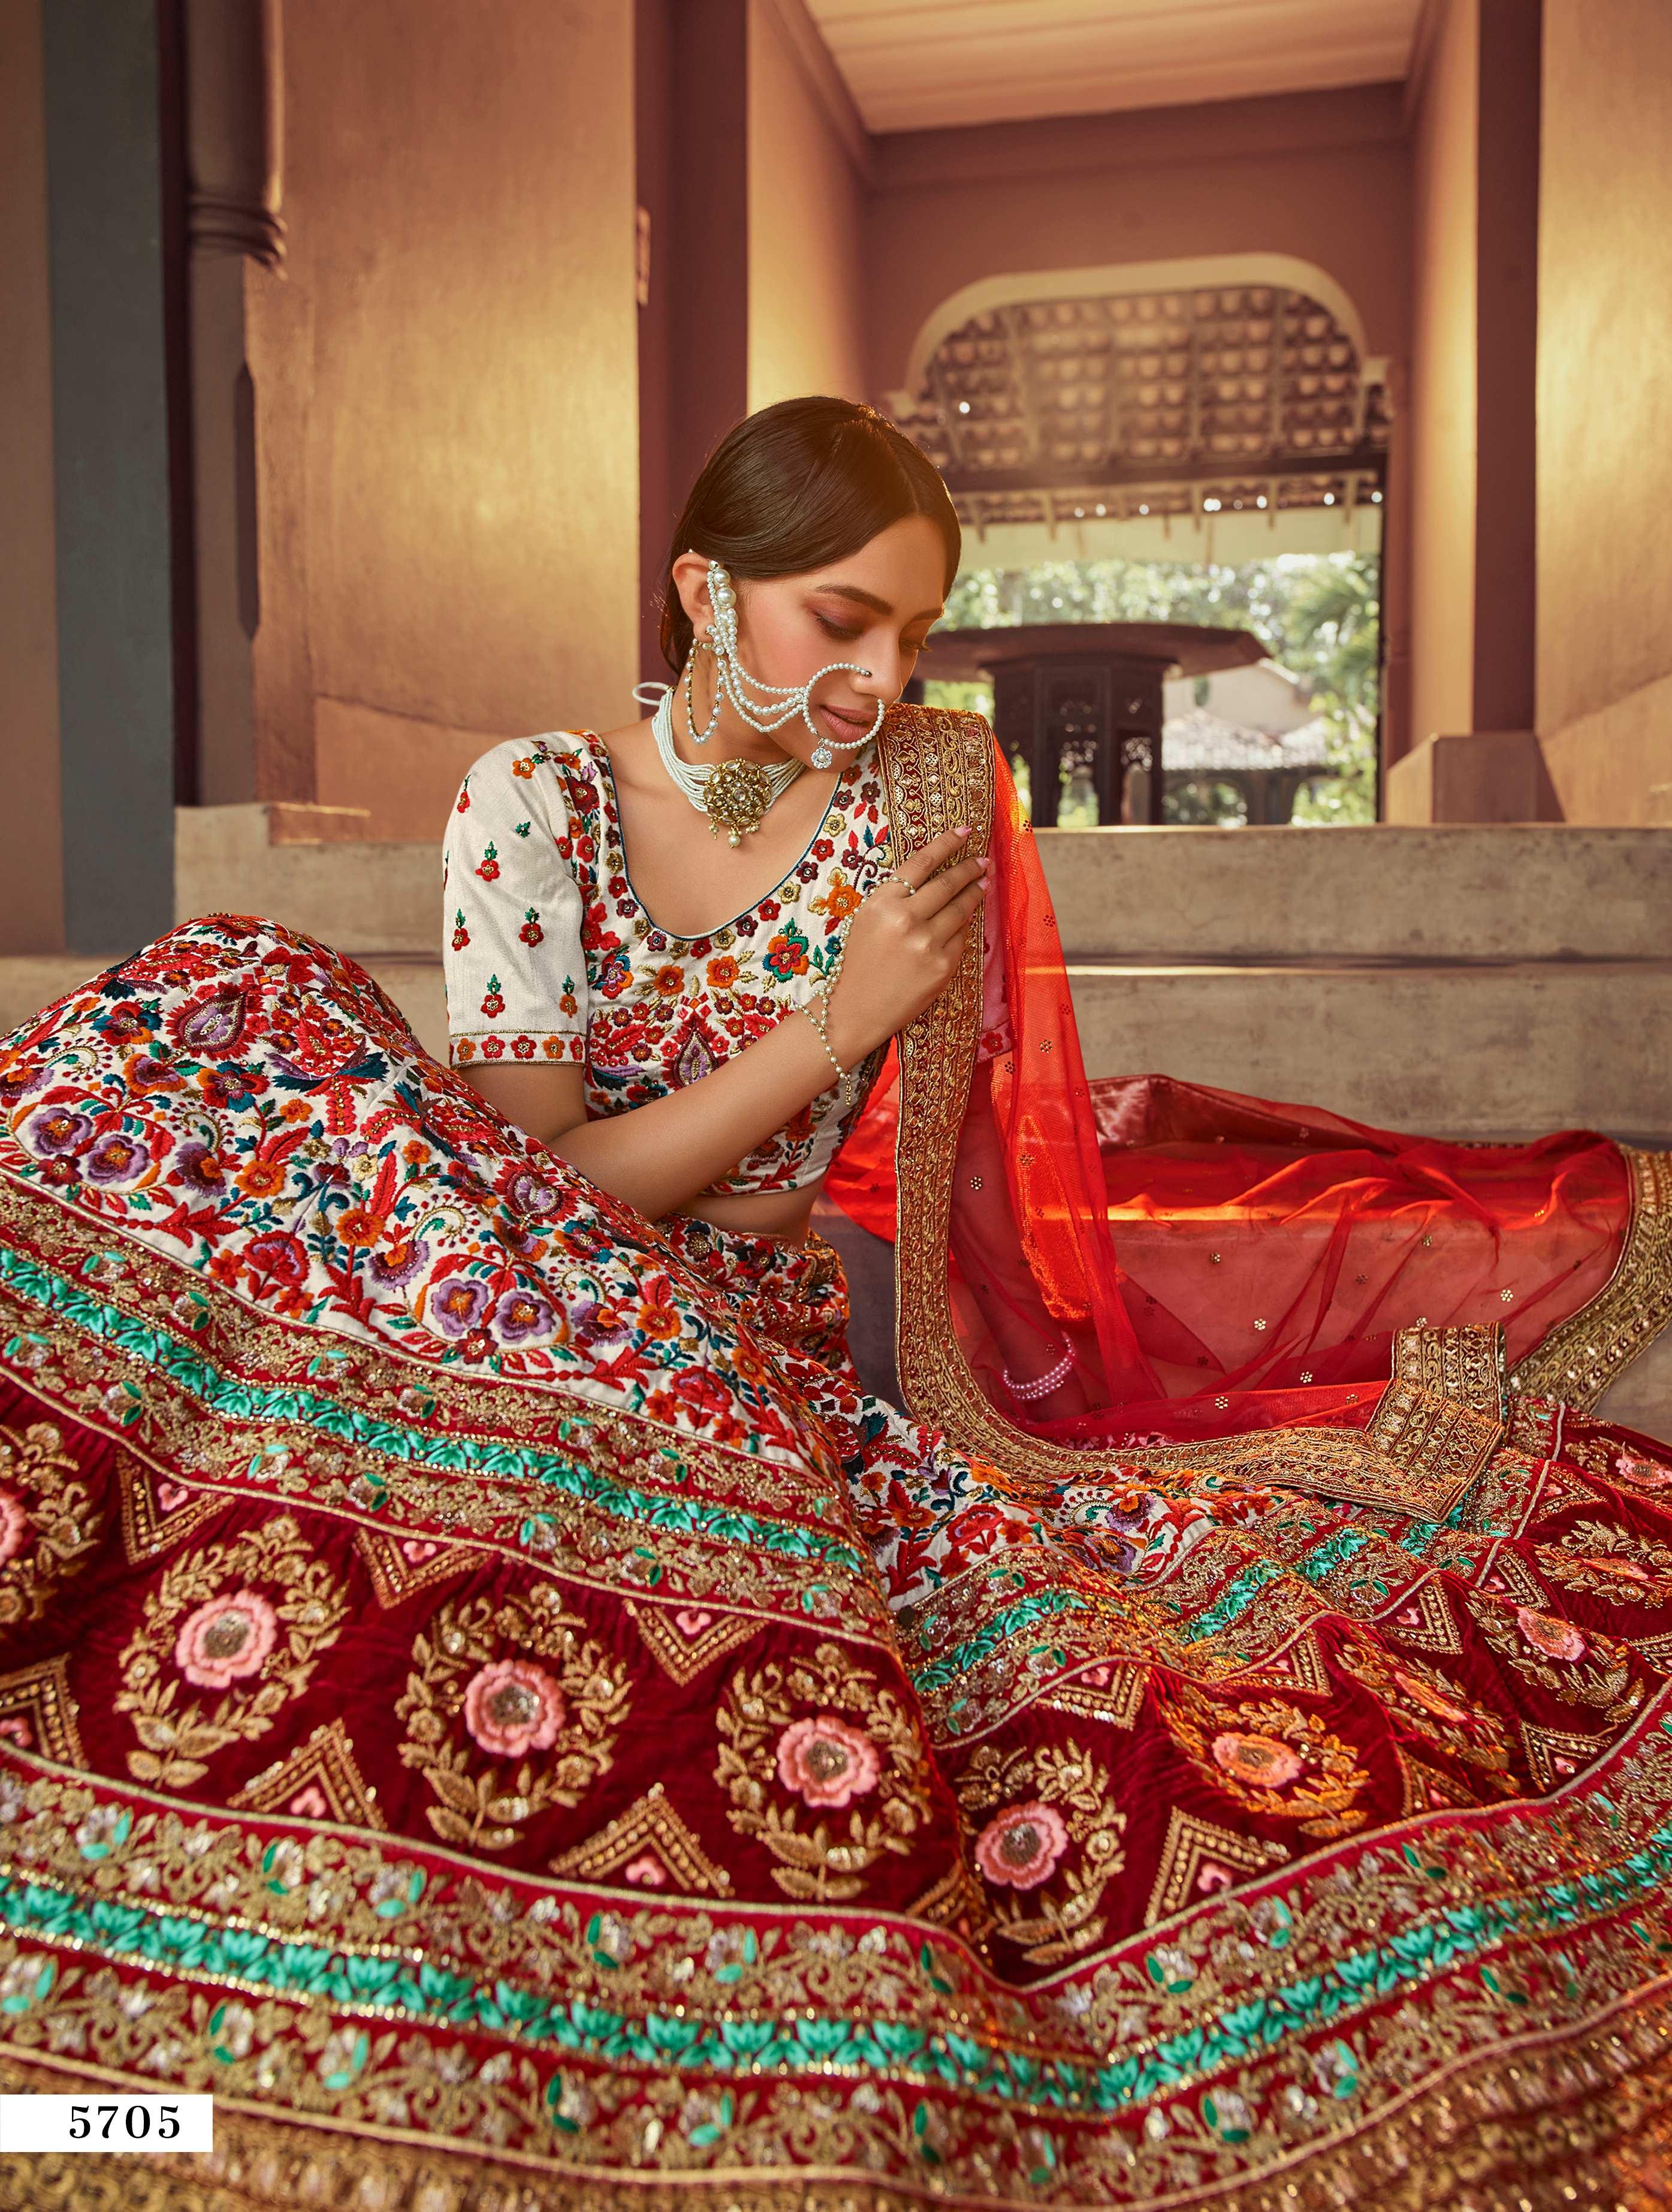 Party wear Indian Wedding Bridal Lehenga Purple Red 13251